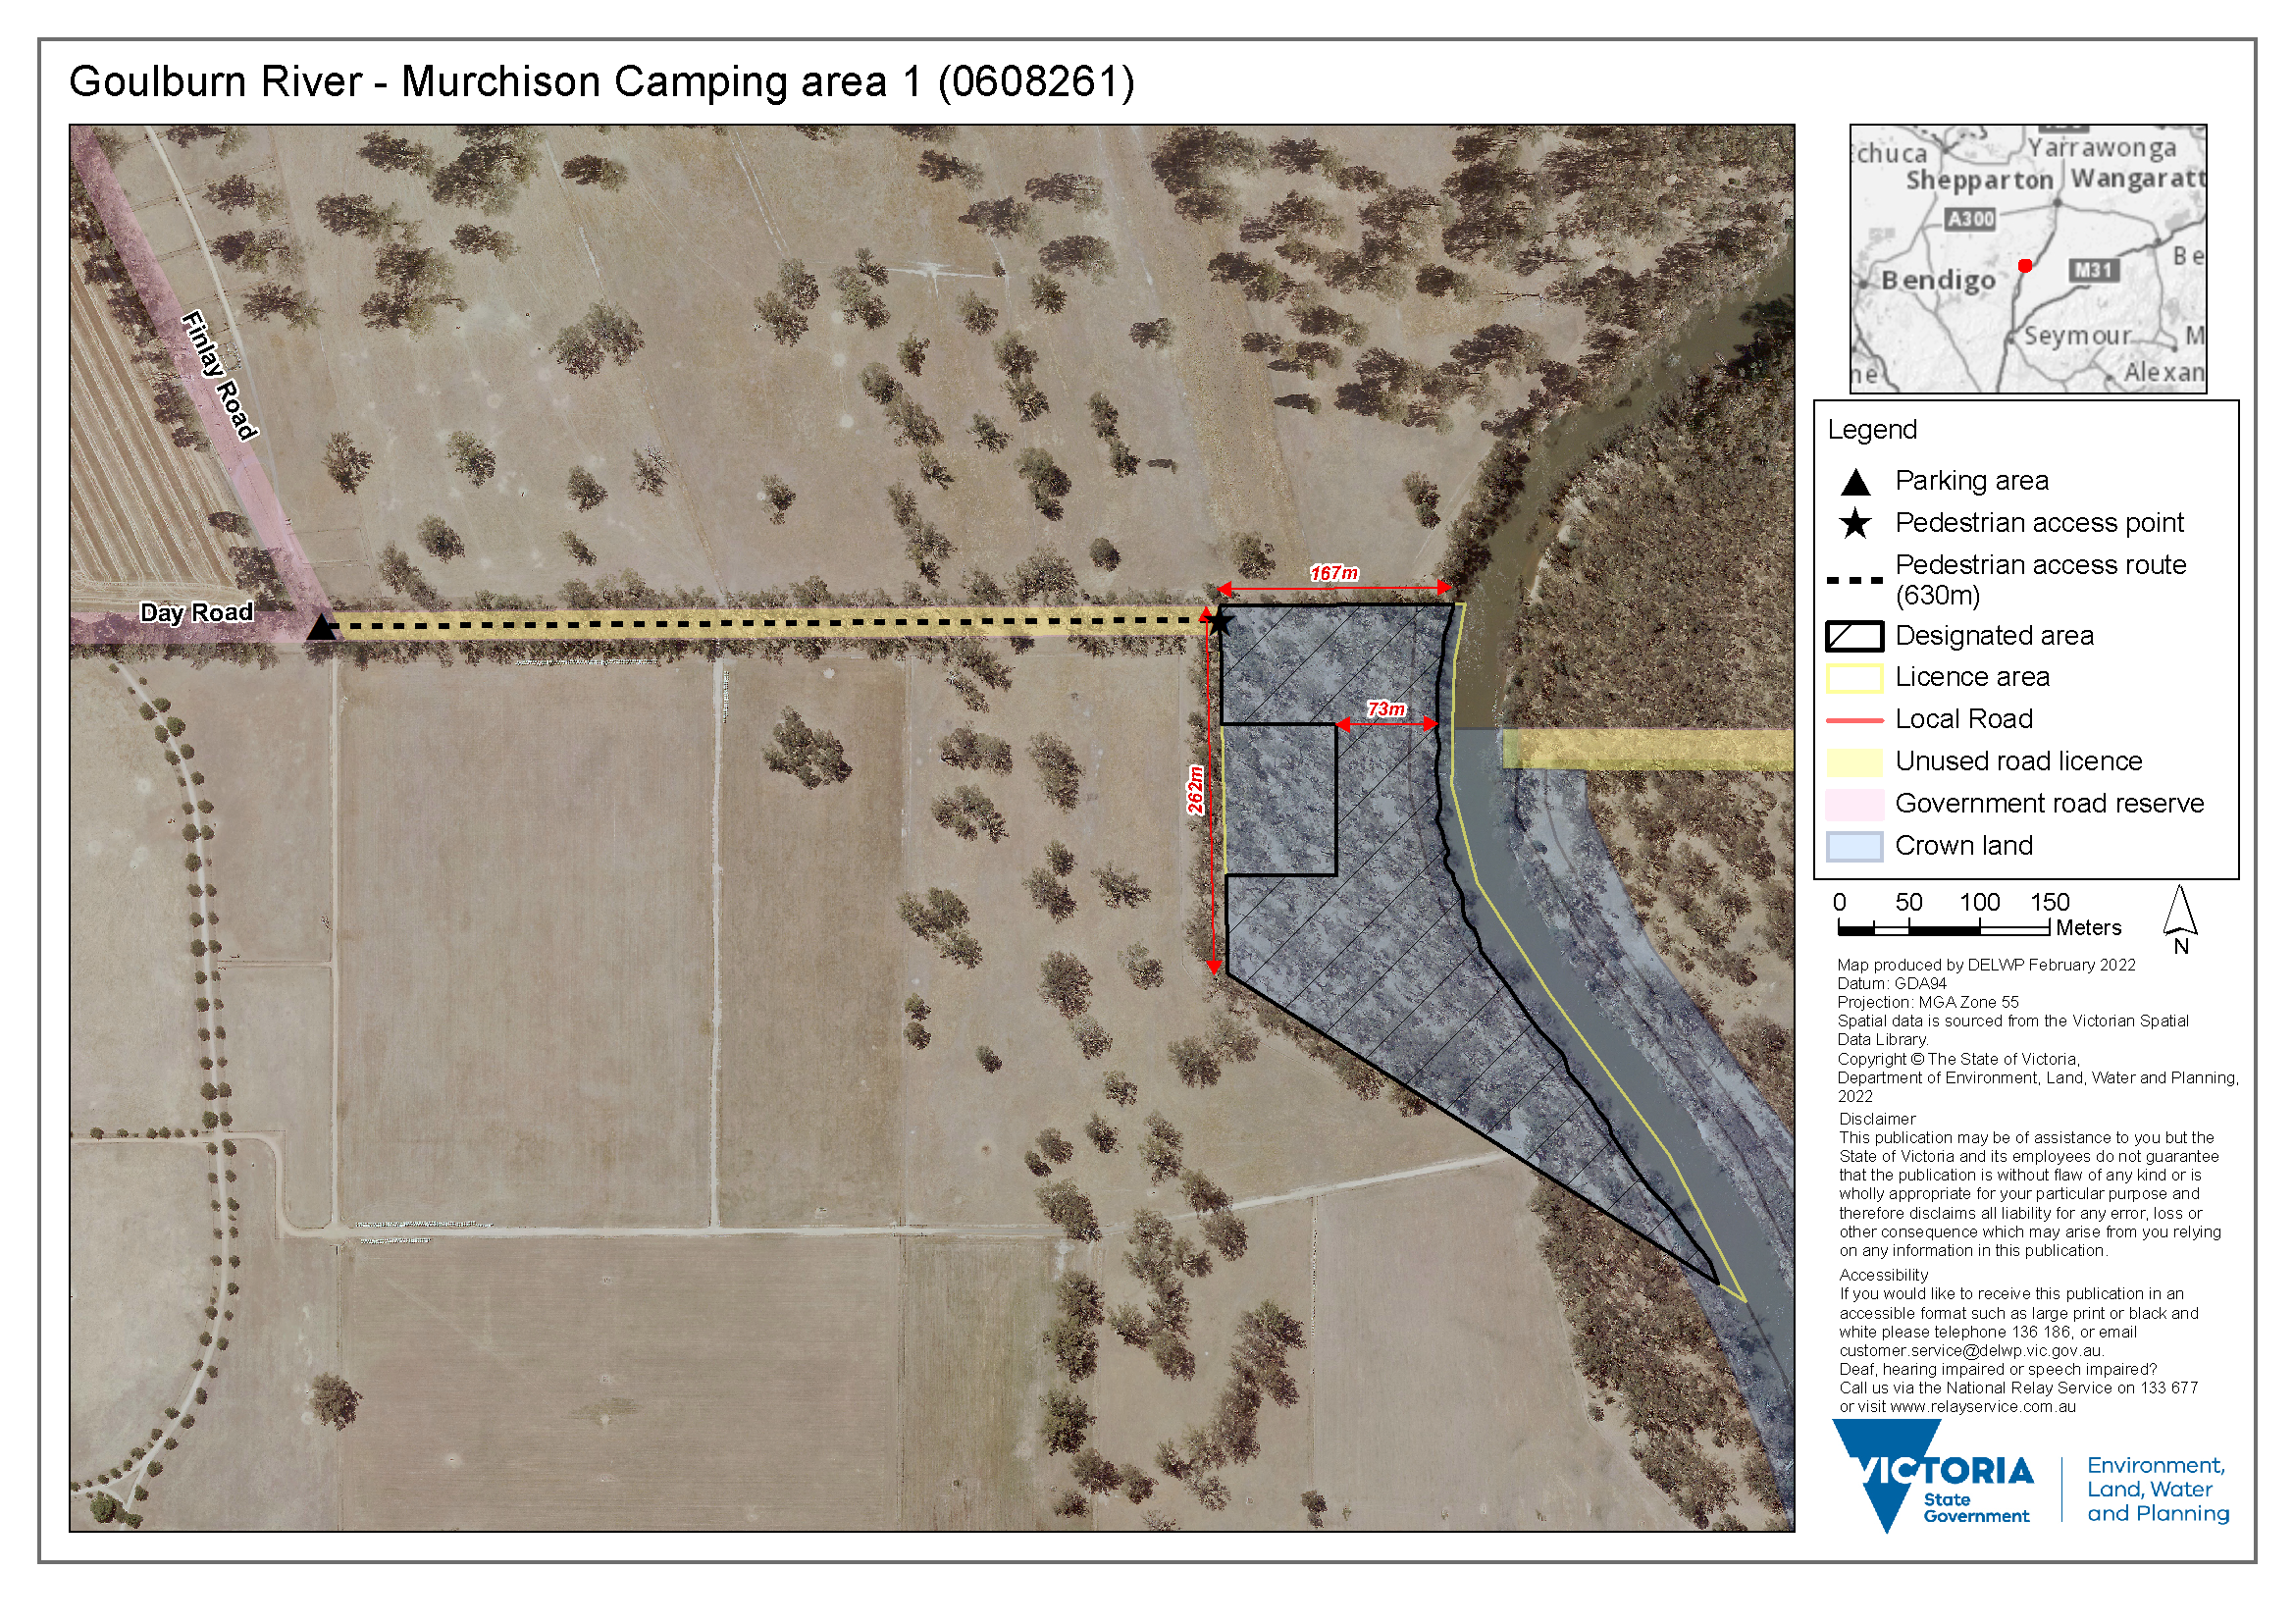 Goulburn River - Murchison camping area 1 map